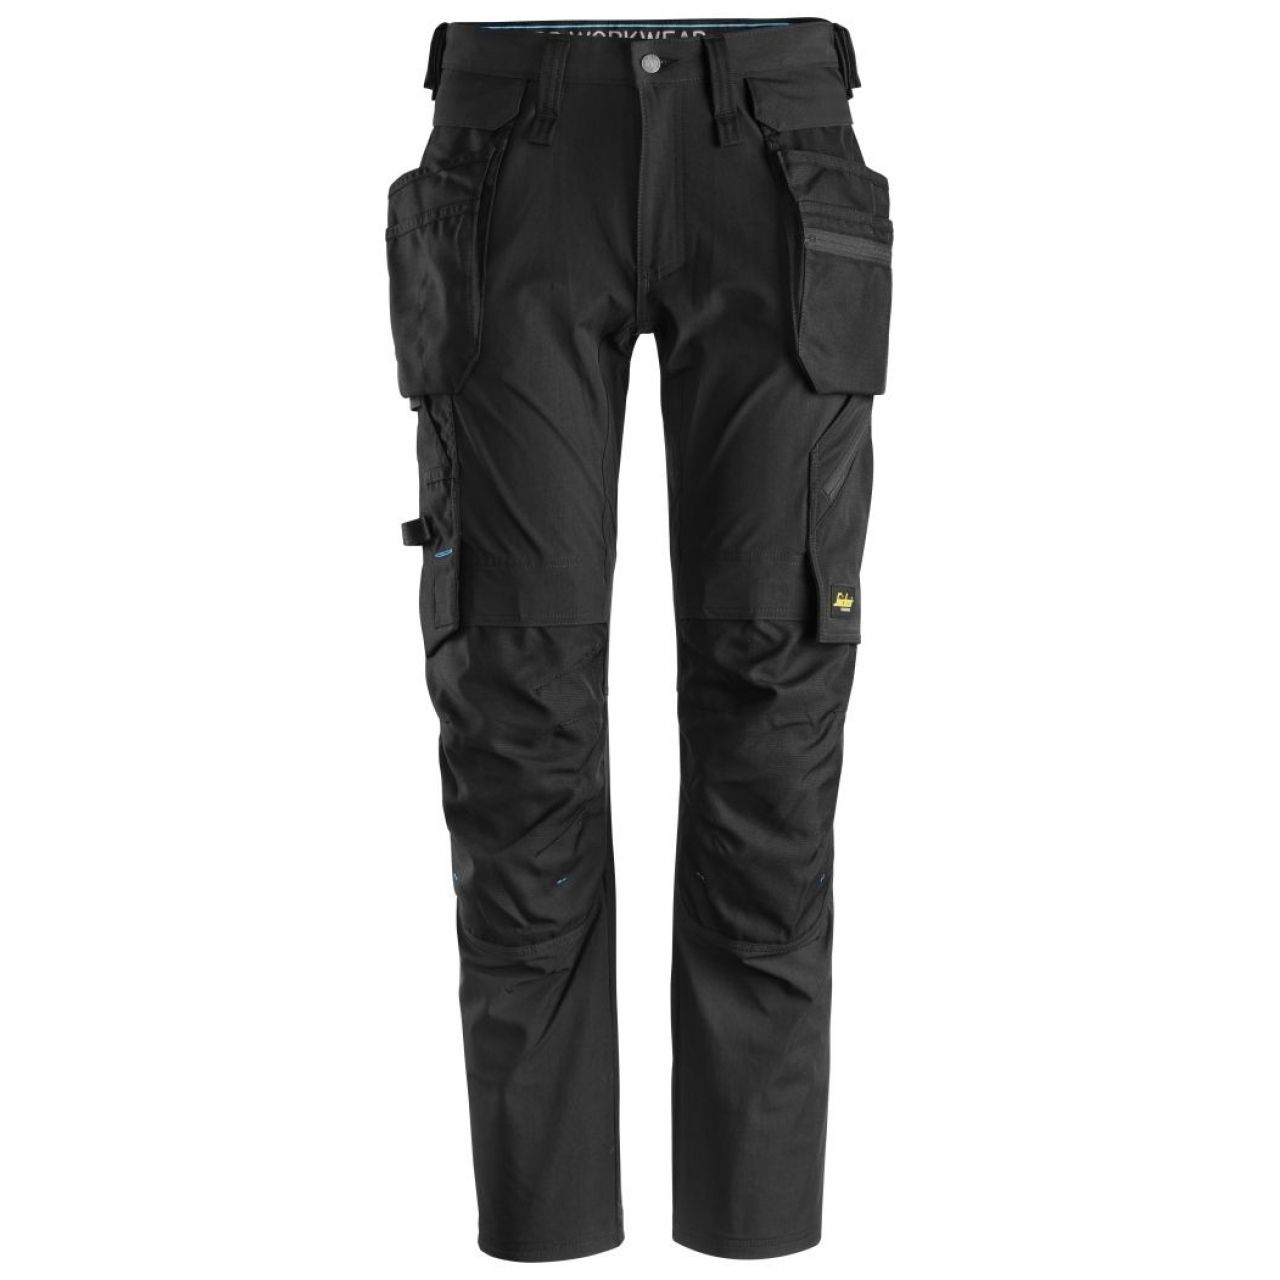 Pantalon + bolsillos flotantes desmontables LiteWork negro talla 120